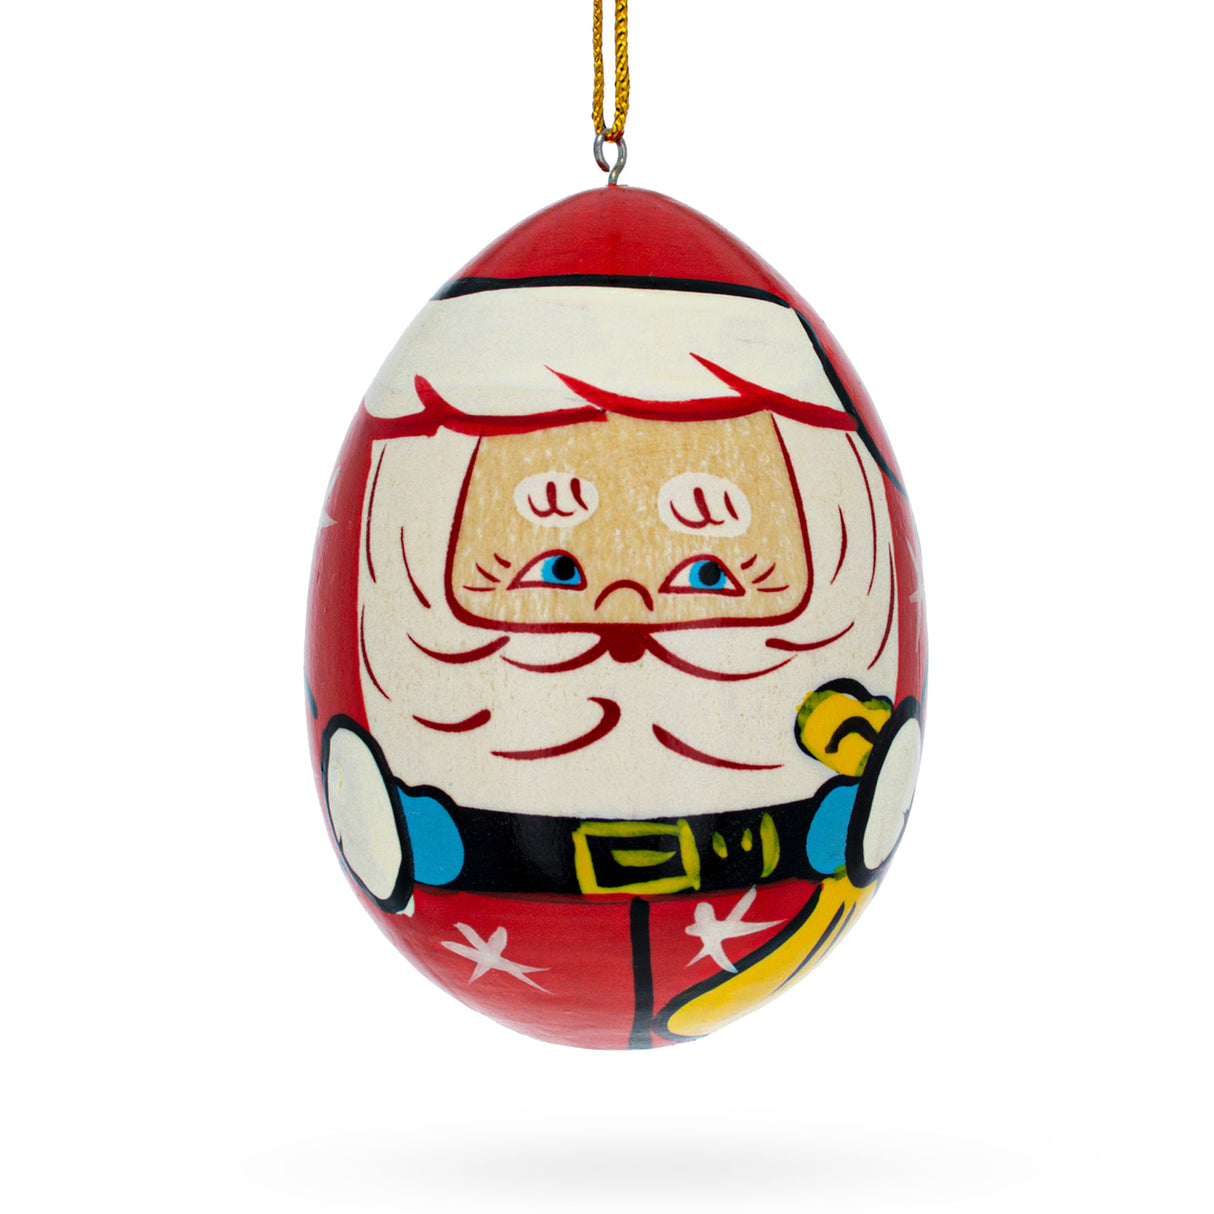 Santa Wooden Egg Shape Christmas Ornament in Red color,  shape